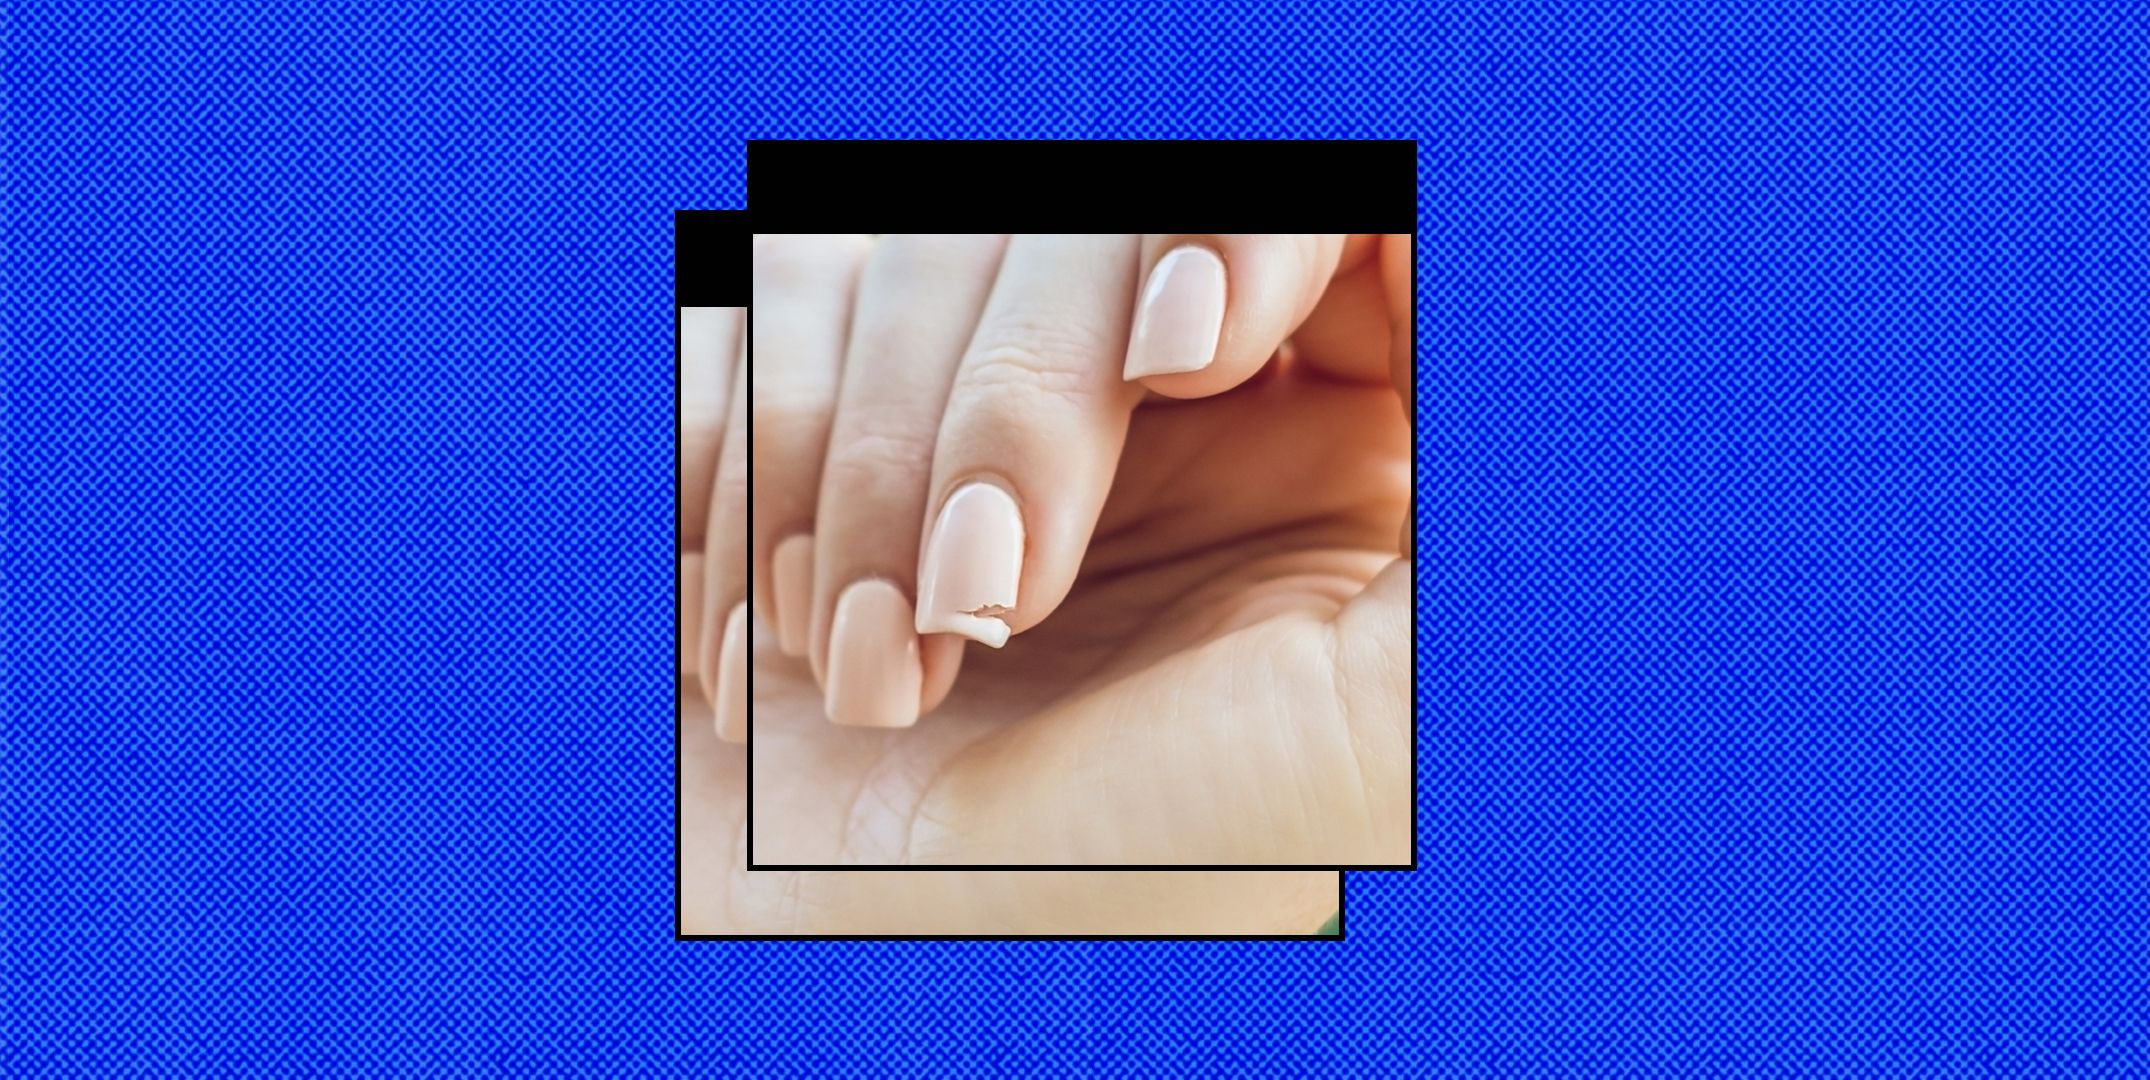 Psoriatic Arthritis Nail Damage: Symptoms and Treatment